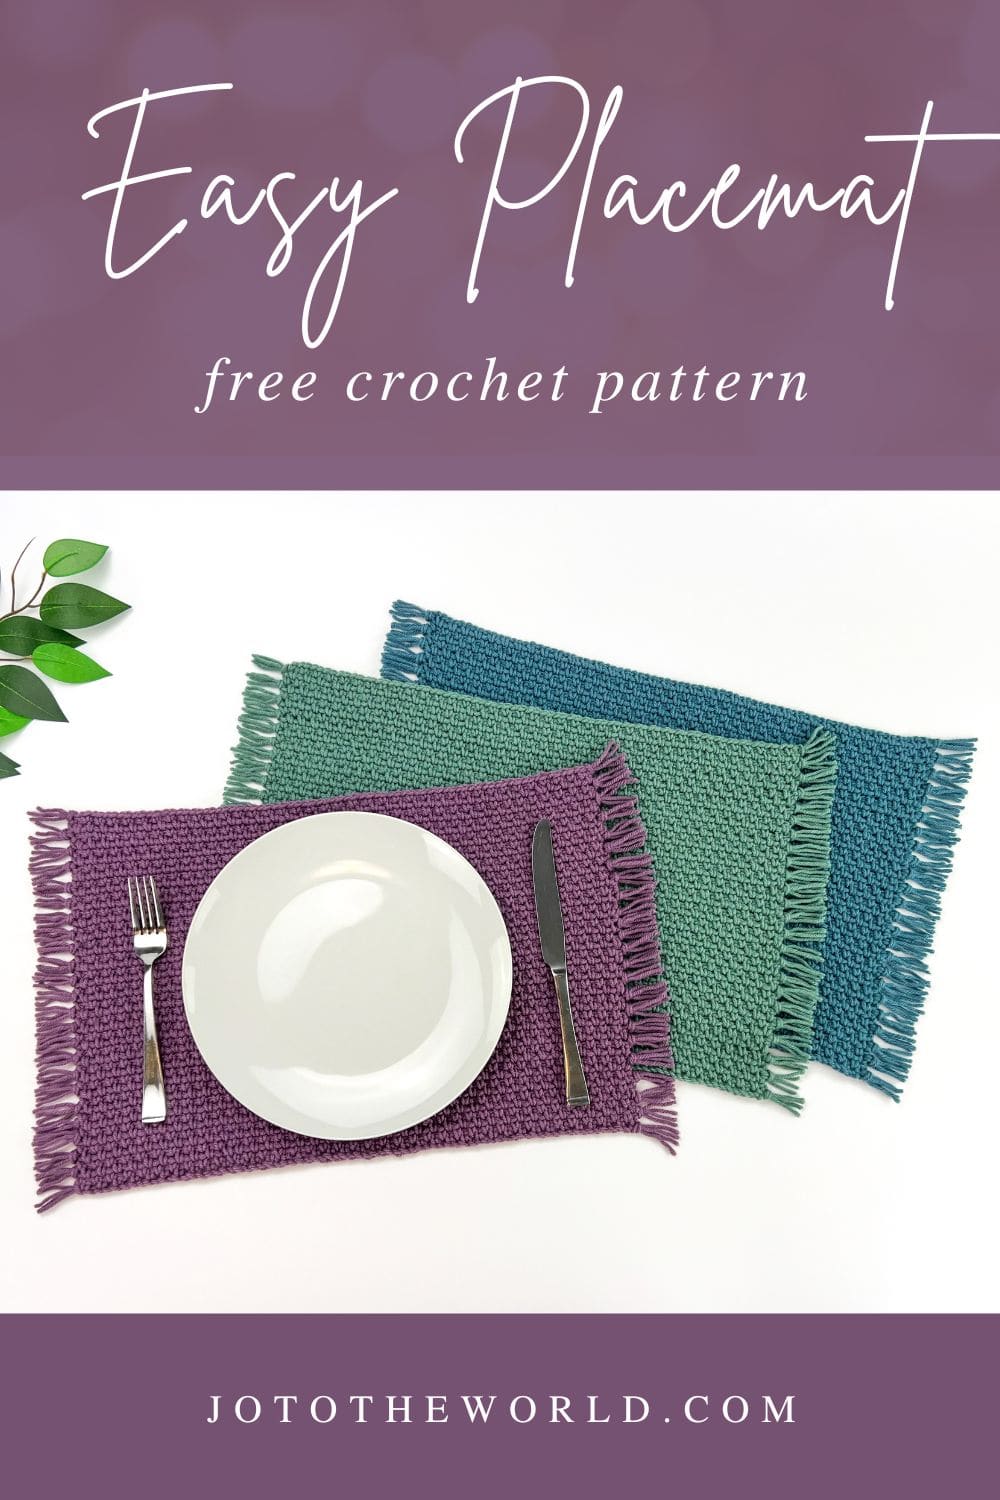 Crochet placemat free pattern